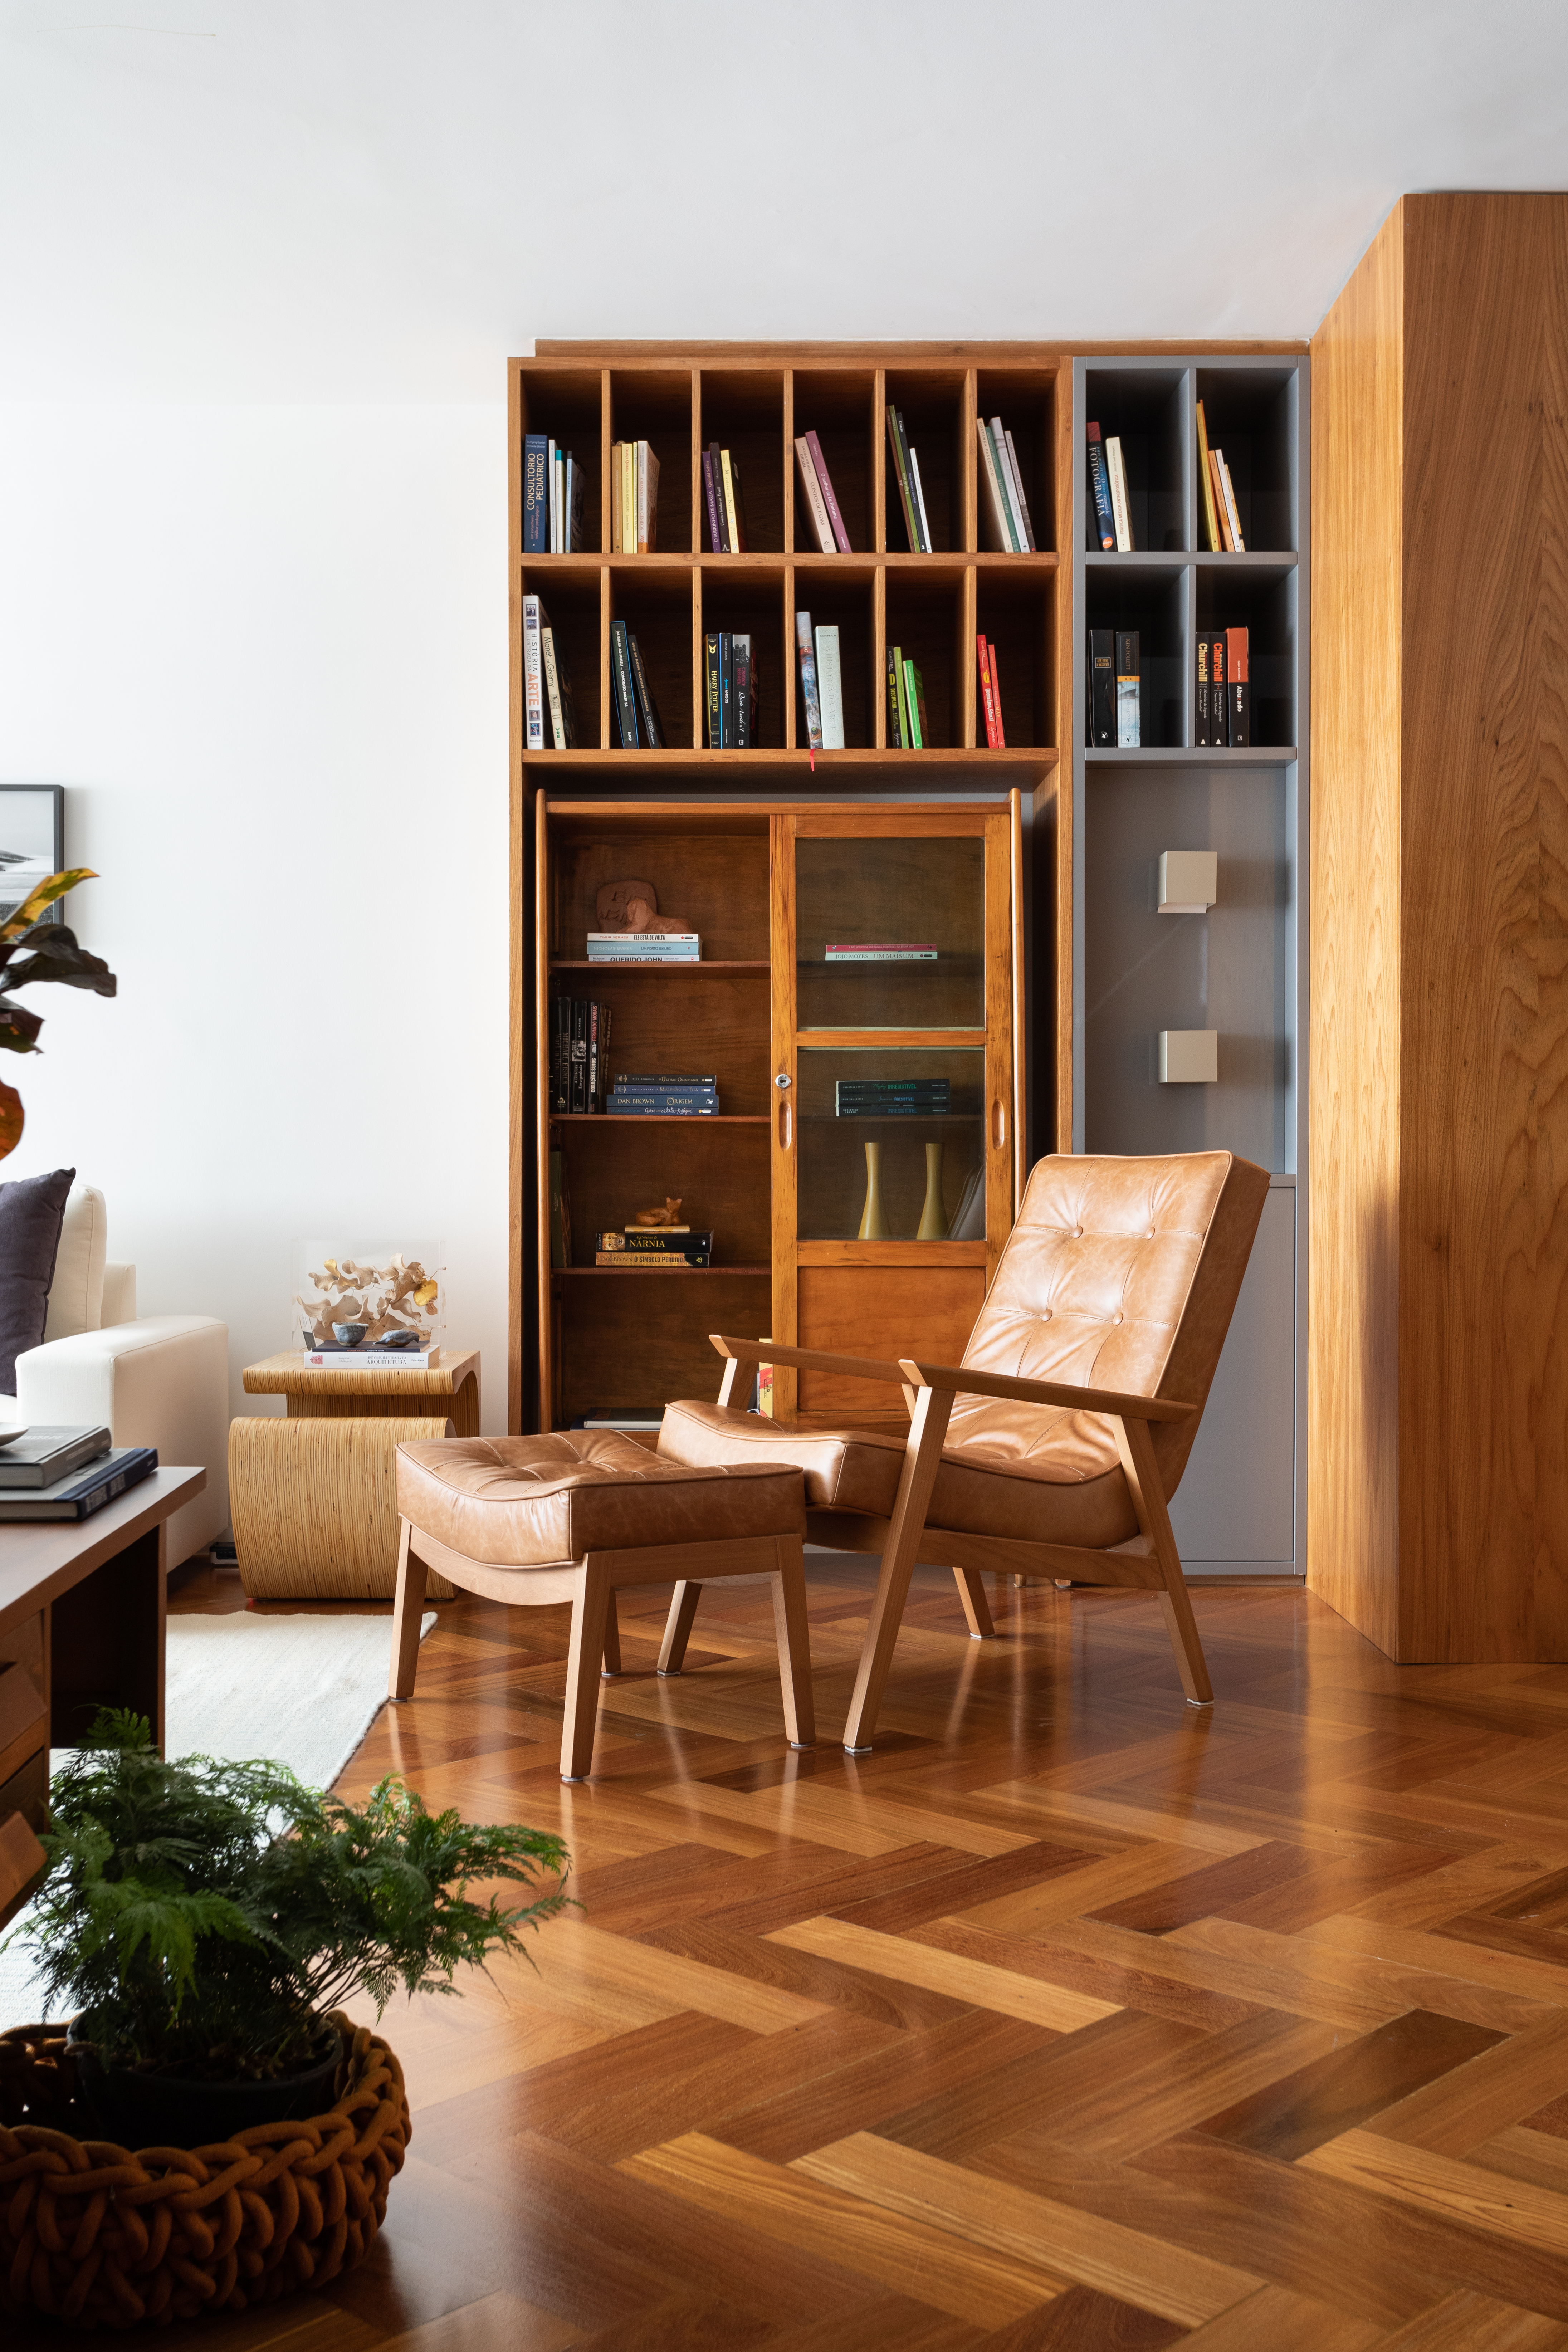 Projeto de Vivi Cirello. Na foto, sala com estante de madeira vintage e poltrona de couro marrom.